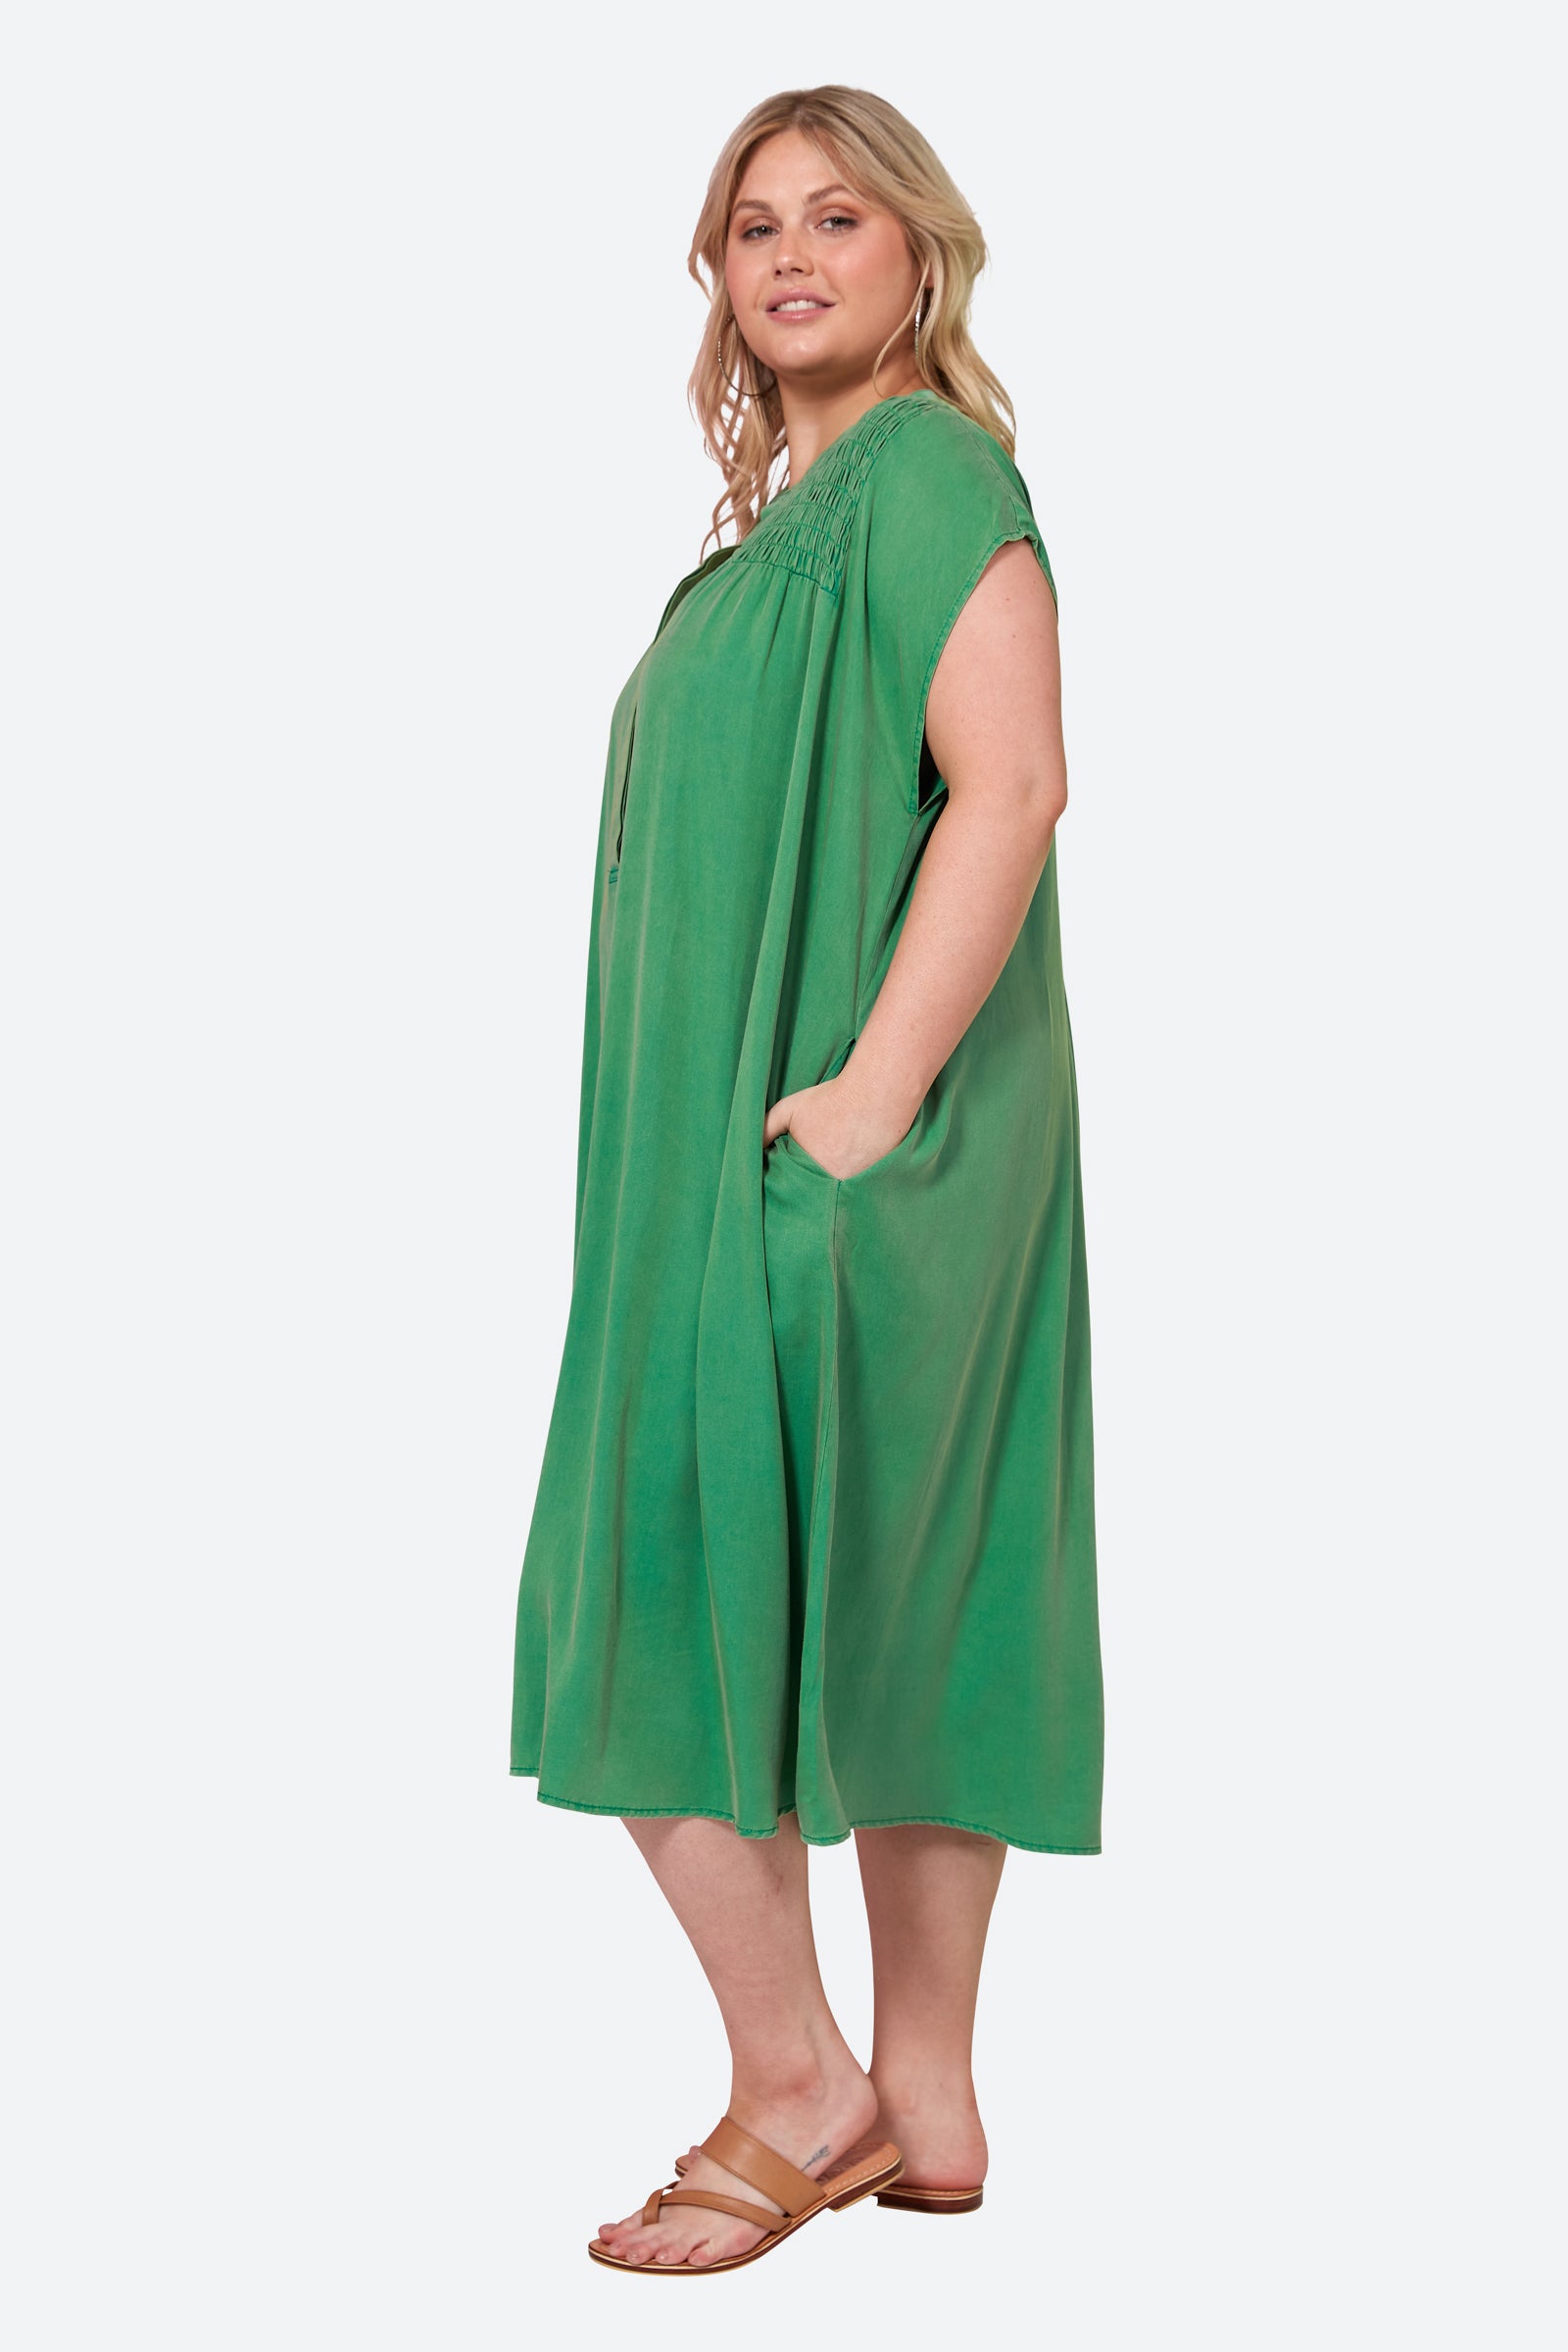 Elan Dress - Meadow - eb&ive Clothing - Dress Mid